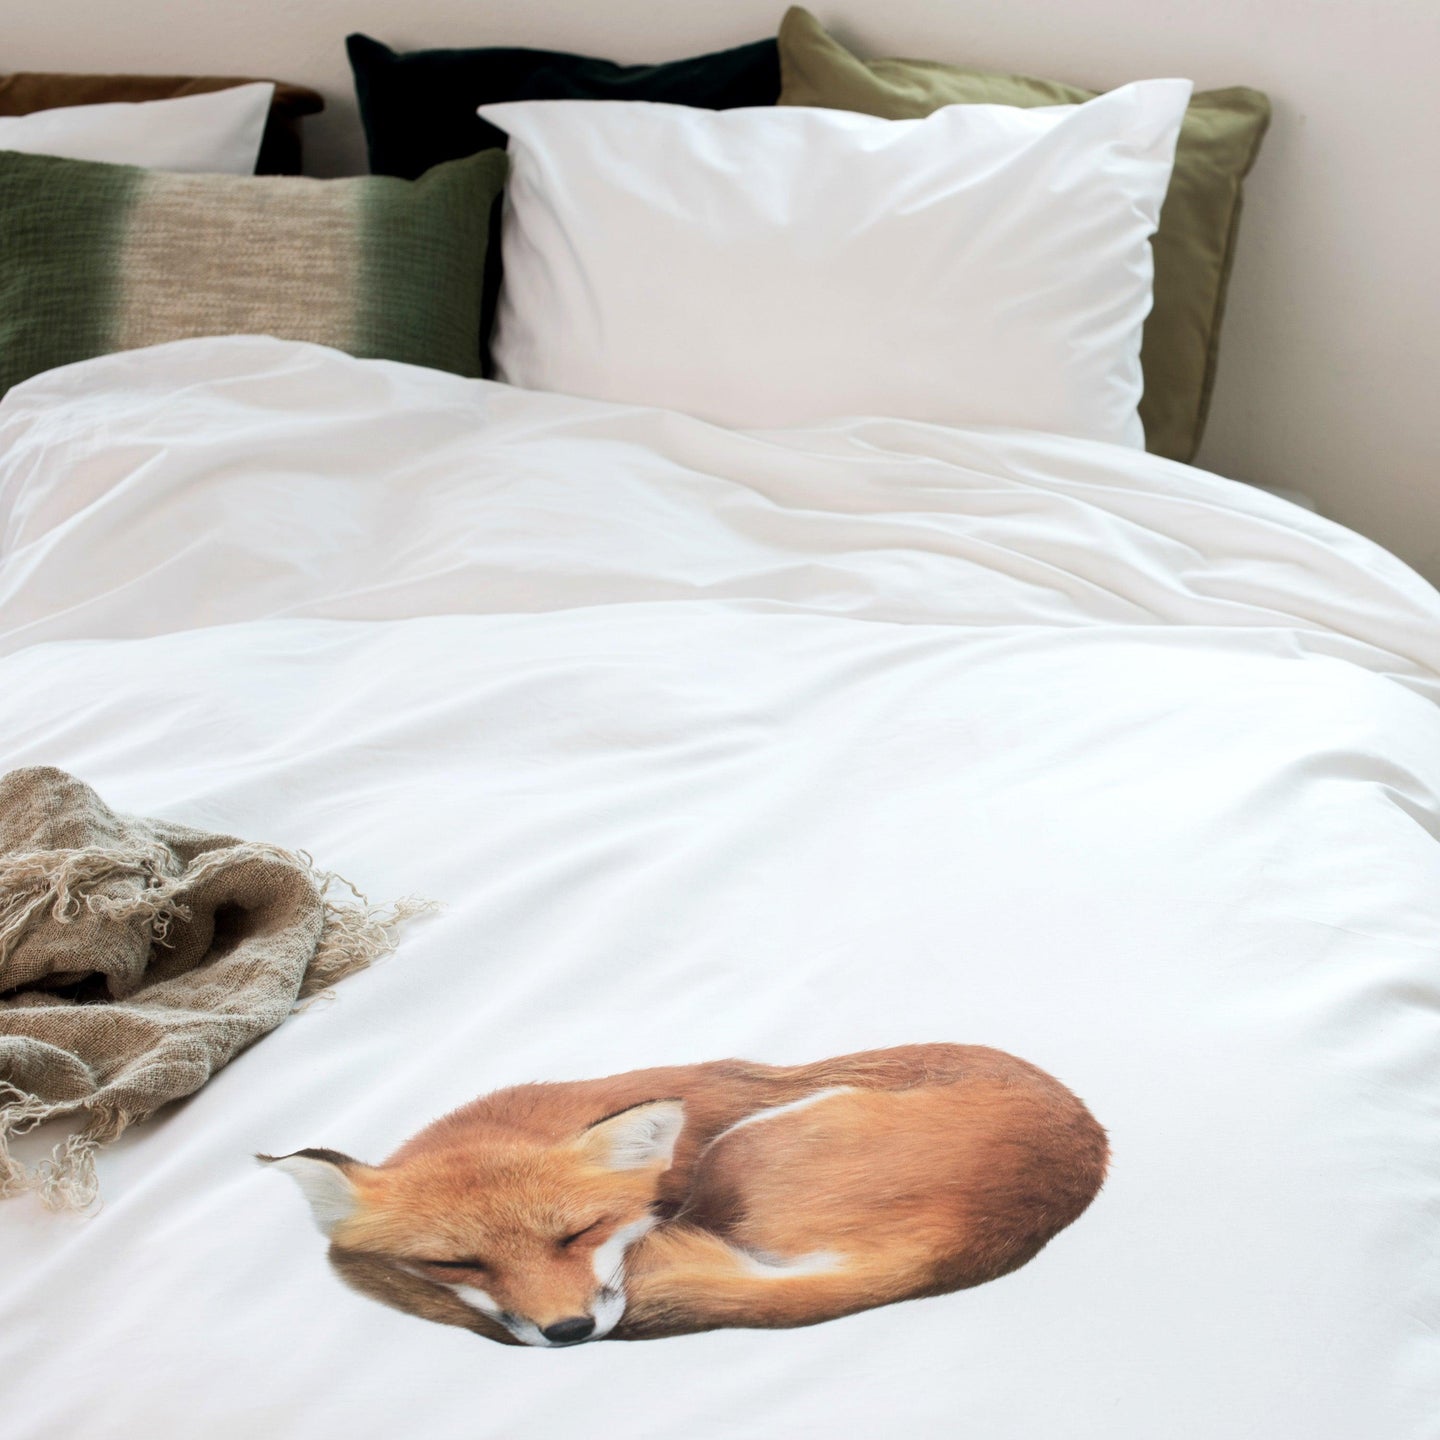 Sleeping Fox dekbedovertrek - SNURK